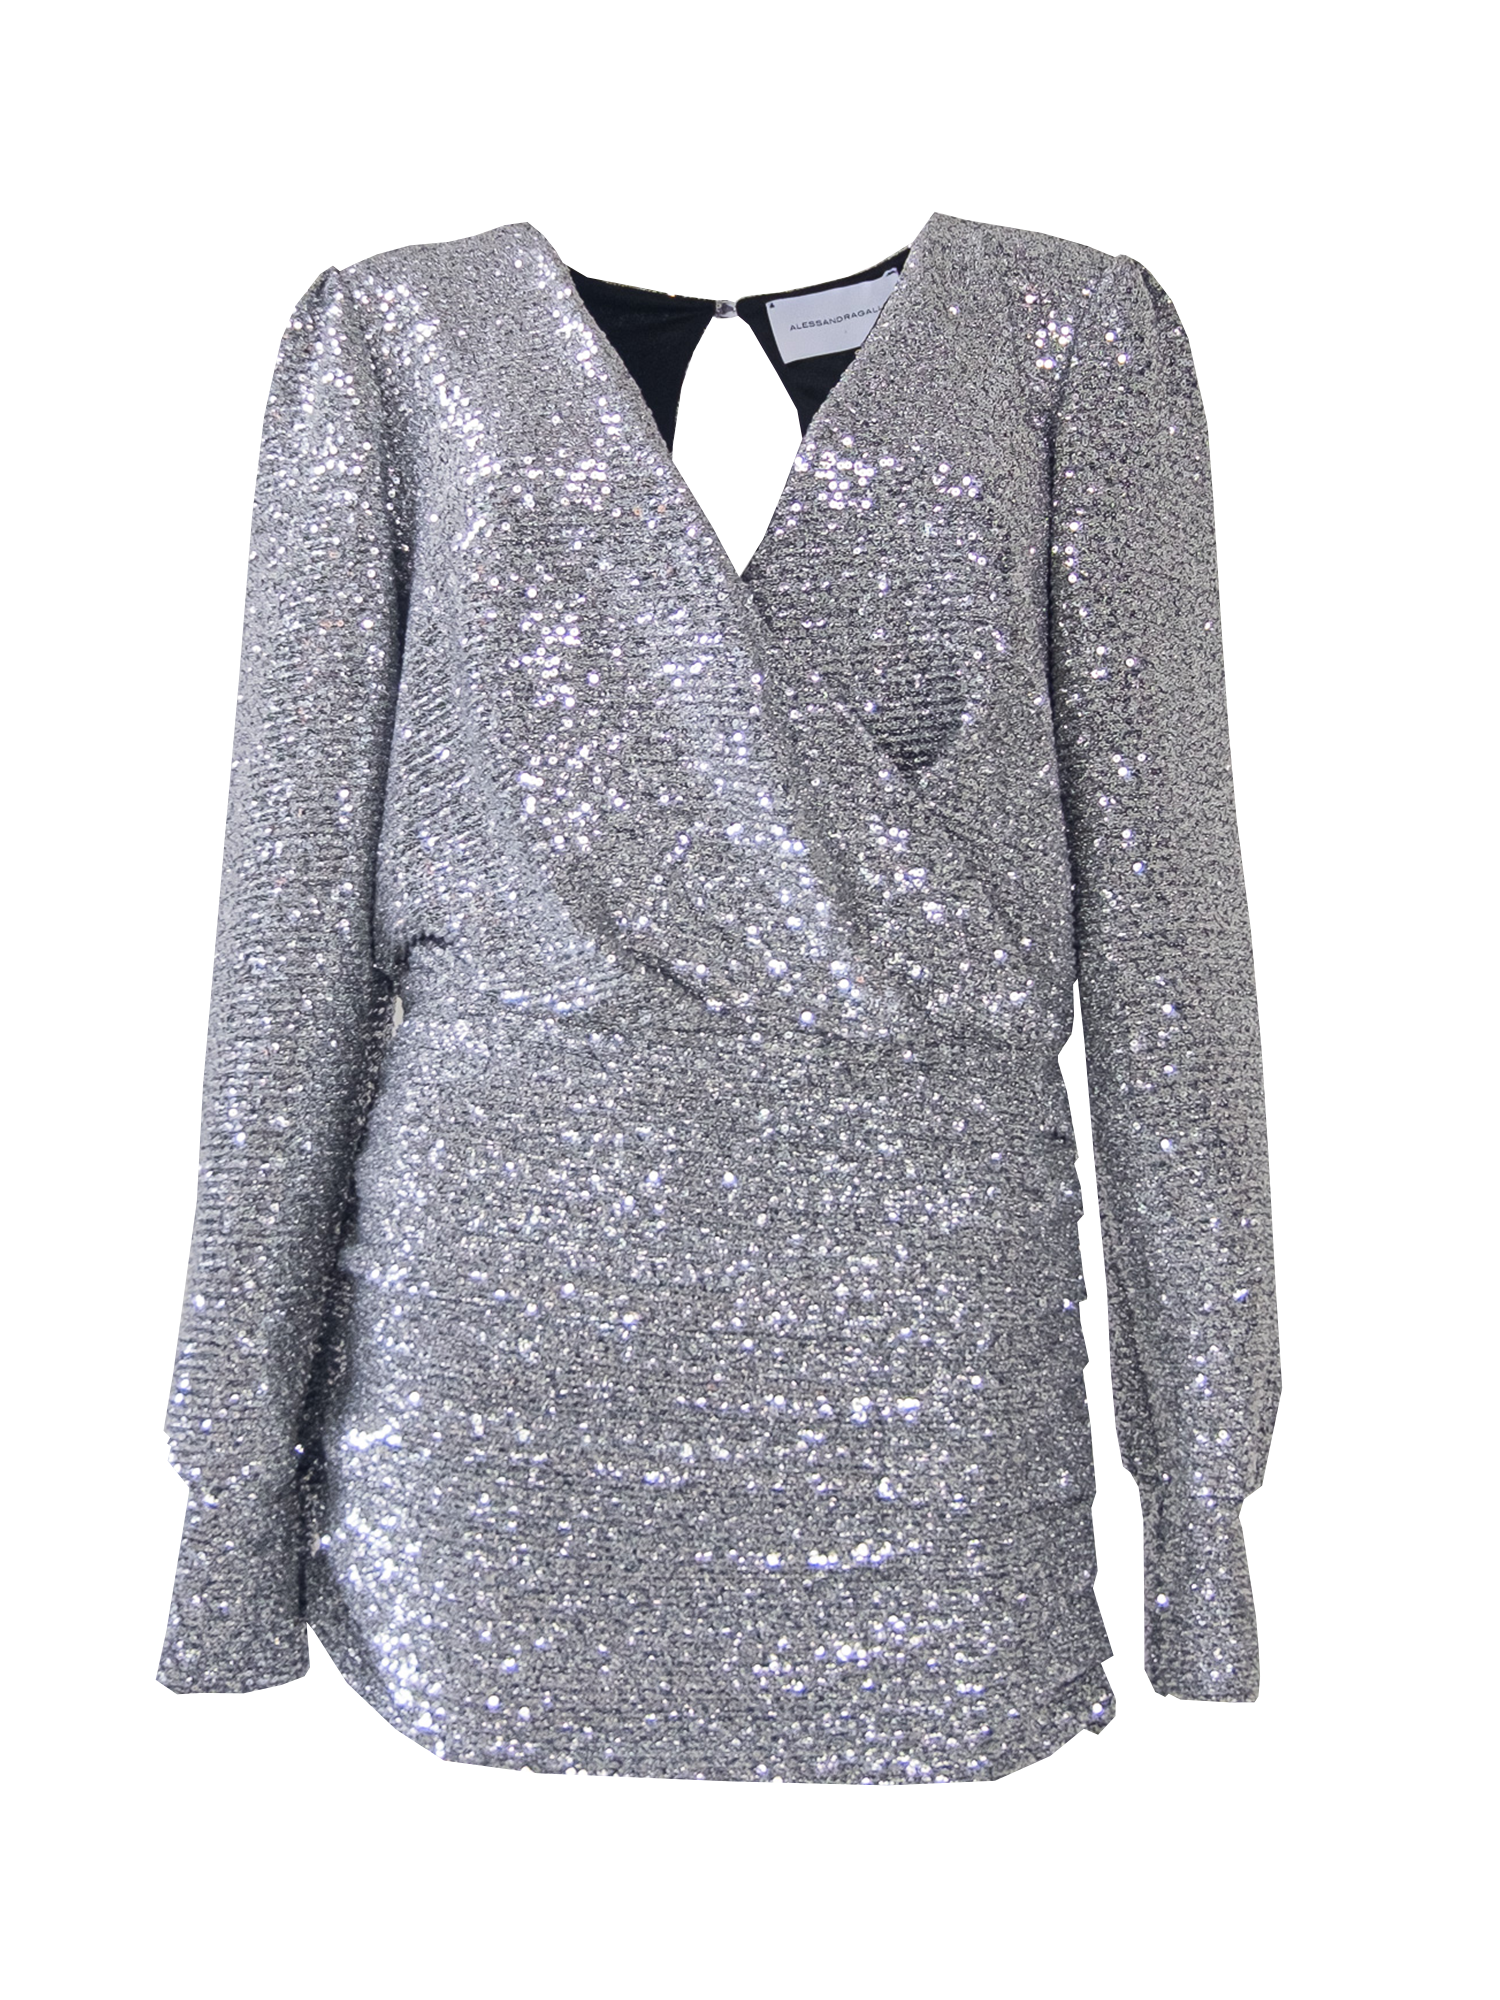 ZOE - short dress in silver sequin